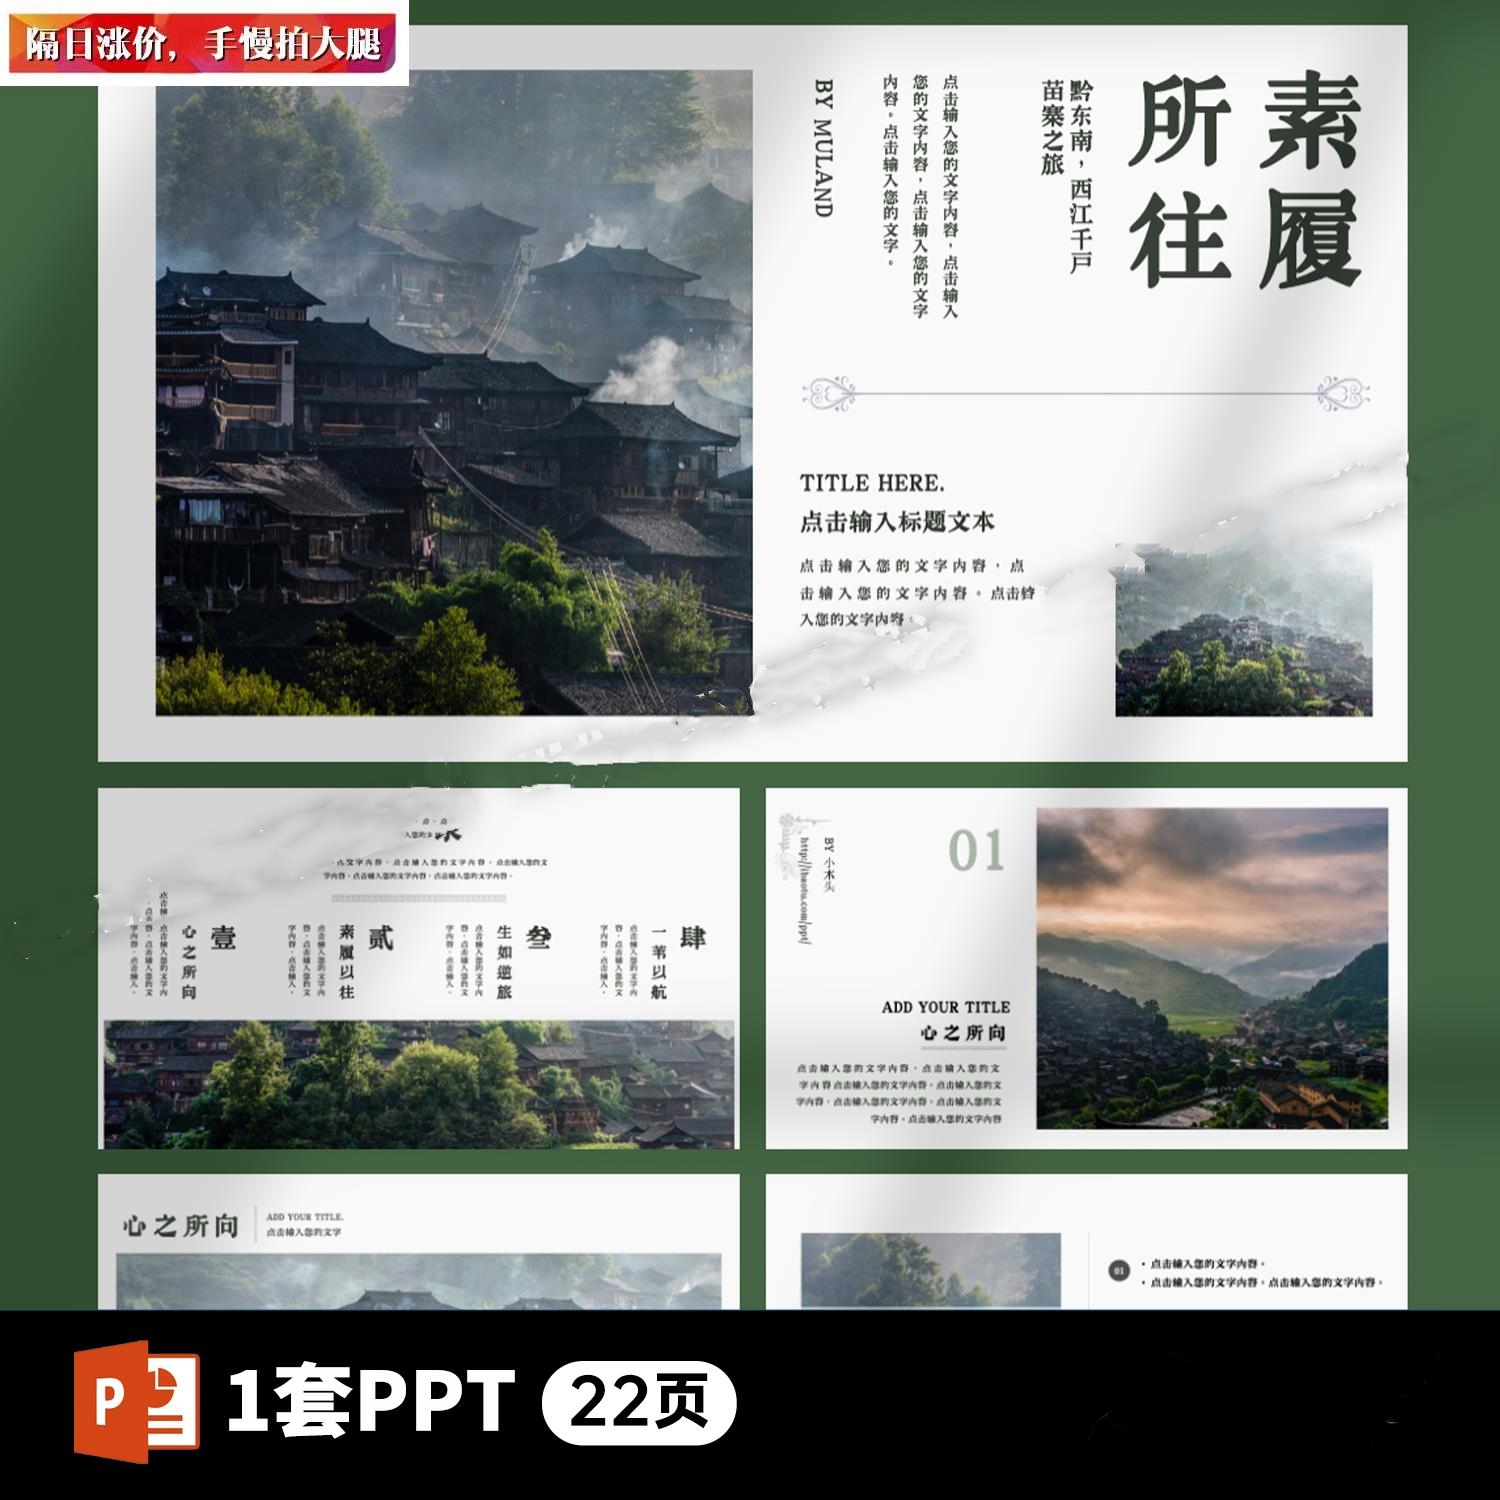 W19贵州苗寨简约文艺新中式风格旅行旅游景点画册线路规划PPT模板